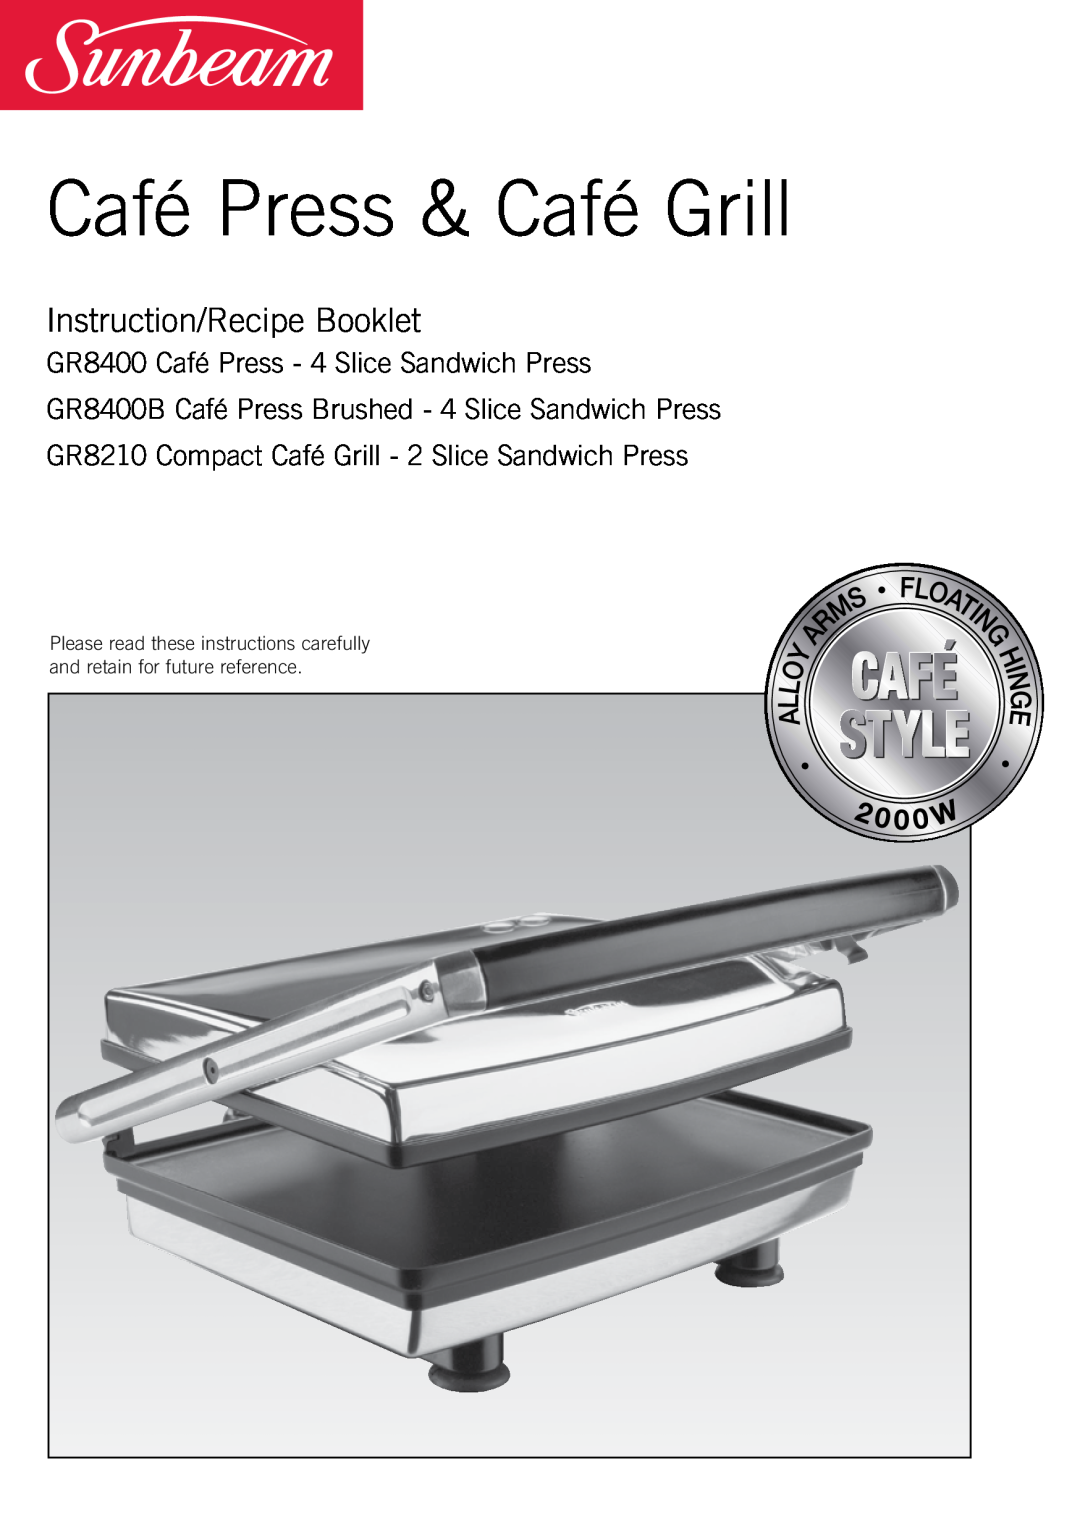 Sunbeam GR8210, GR8400, GR8410 manual Café Press, INSTRUCTION/RECIPE BOOKLET Café Grill 